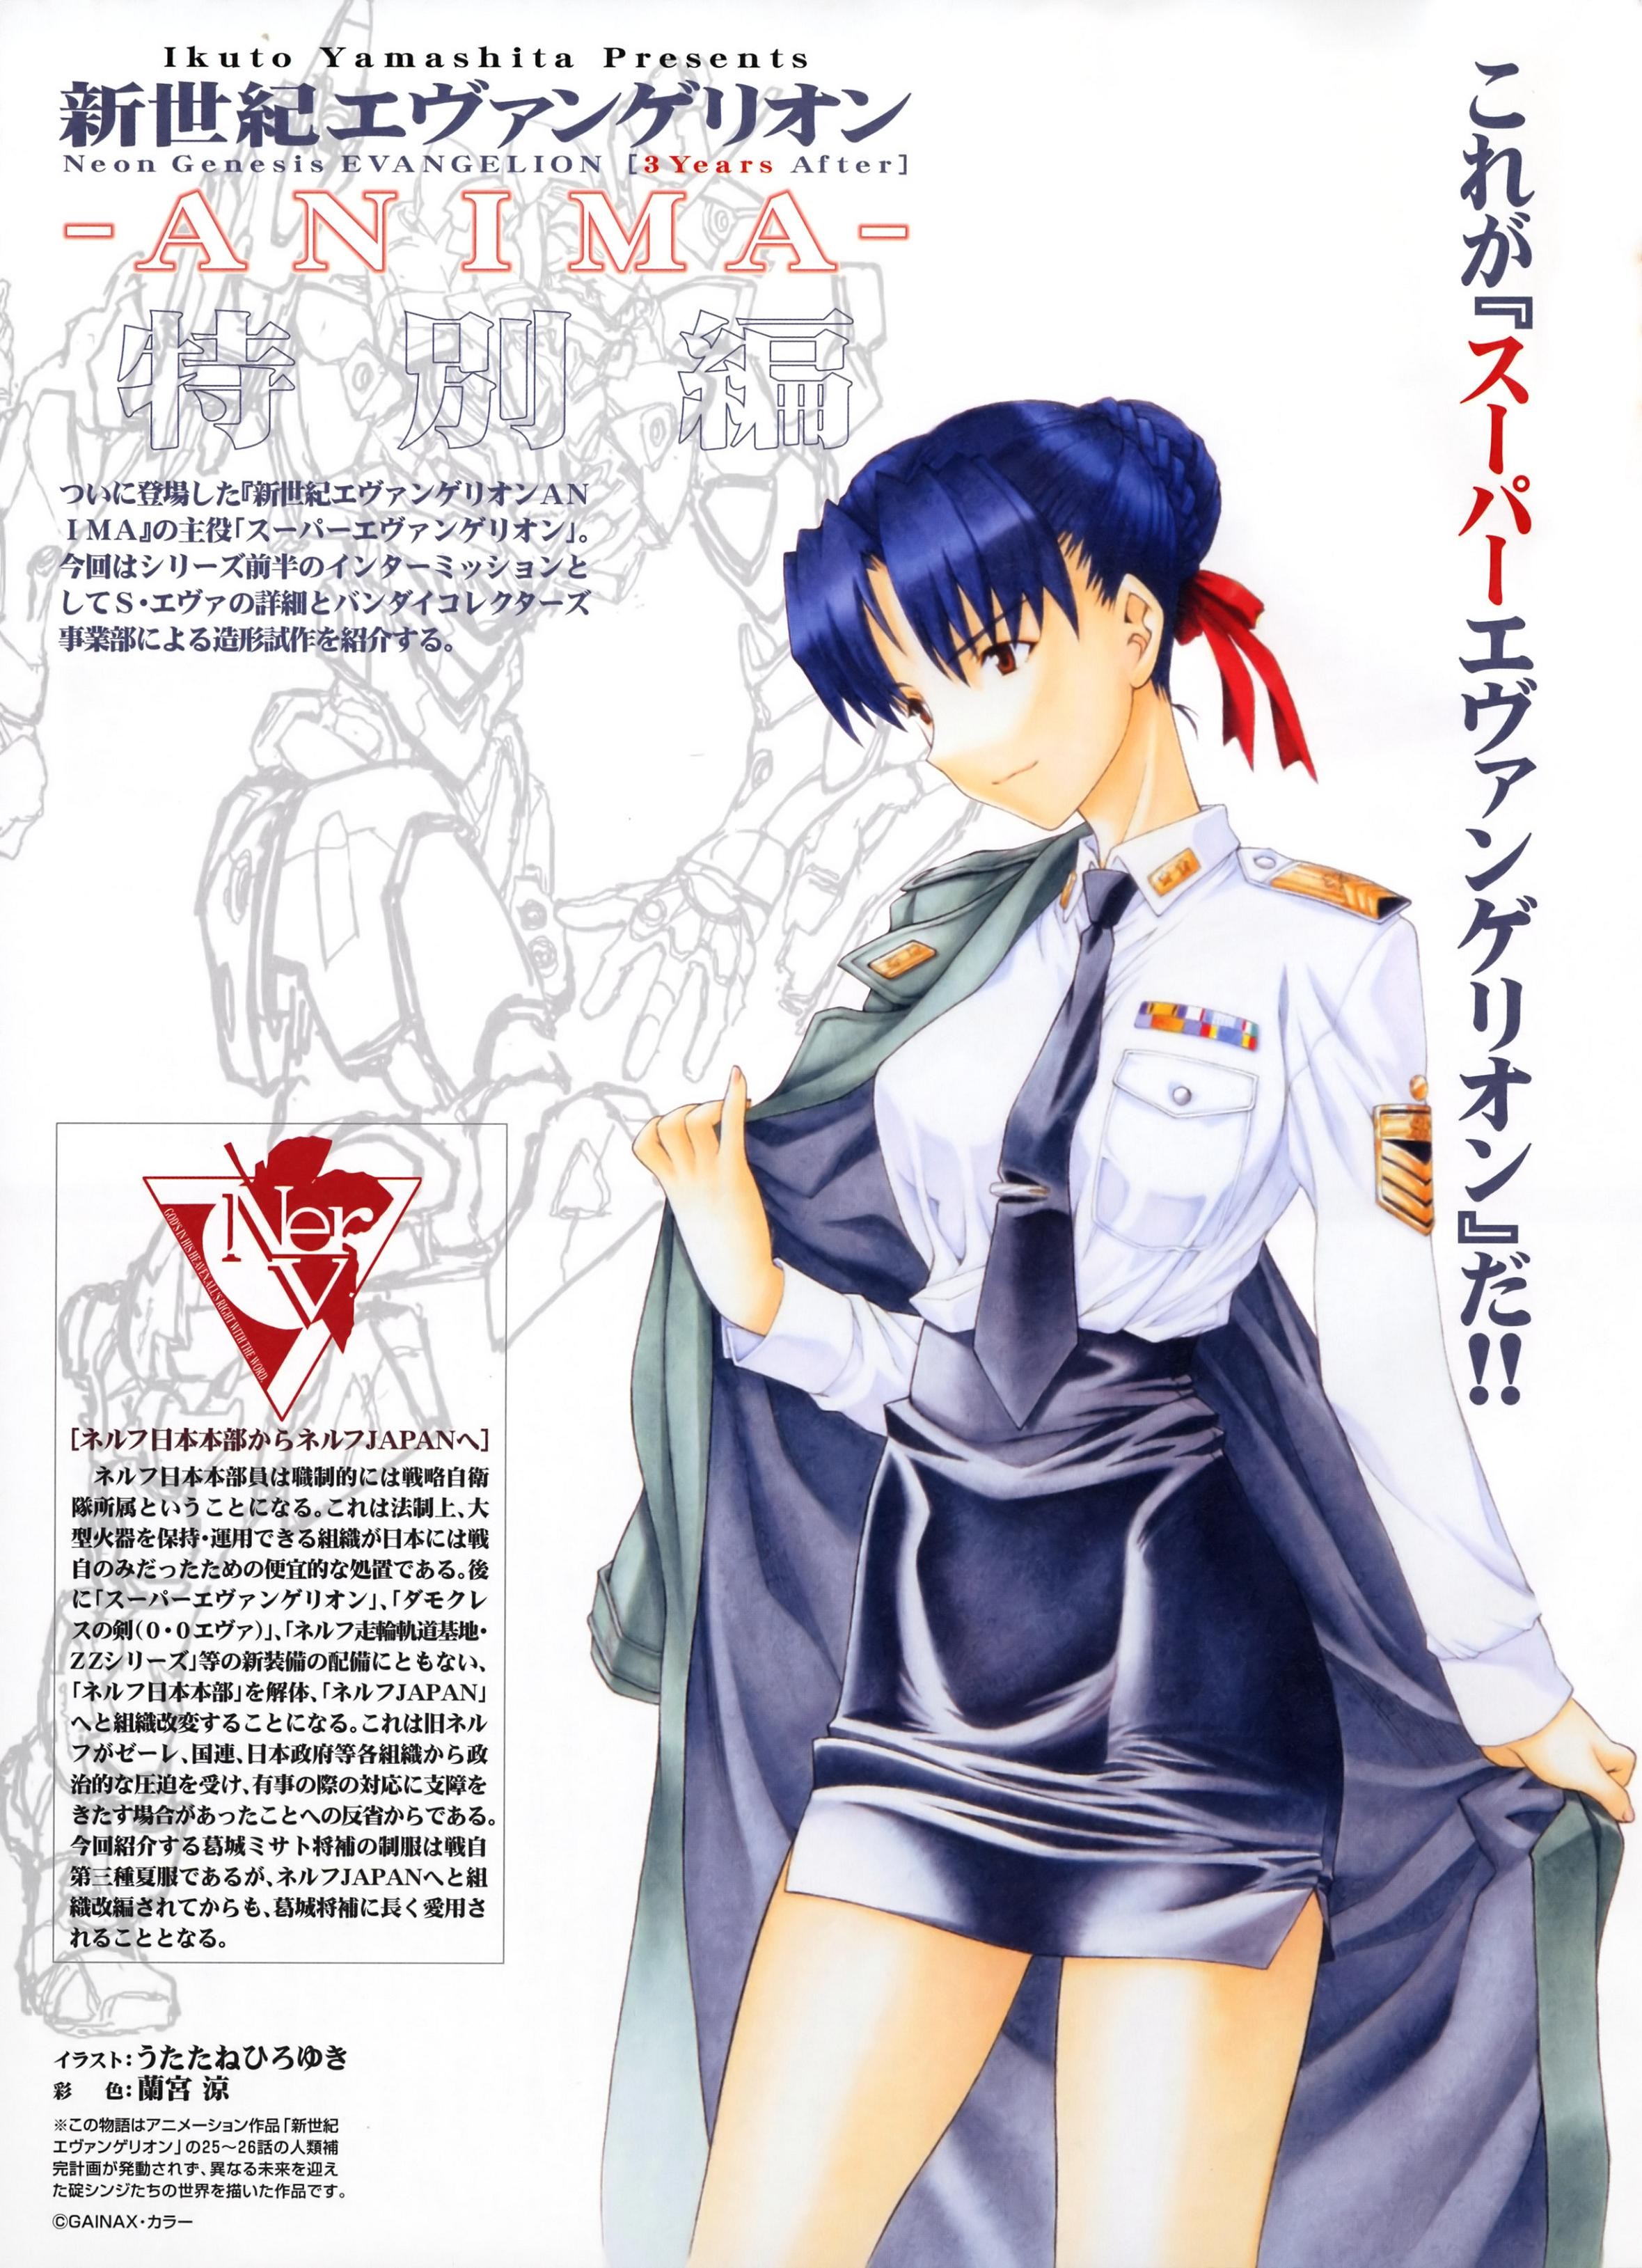 Anime Neon Genesis Evangelion Katsuragi Misato 2359x3258